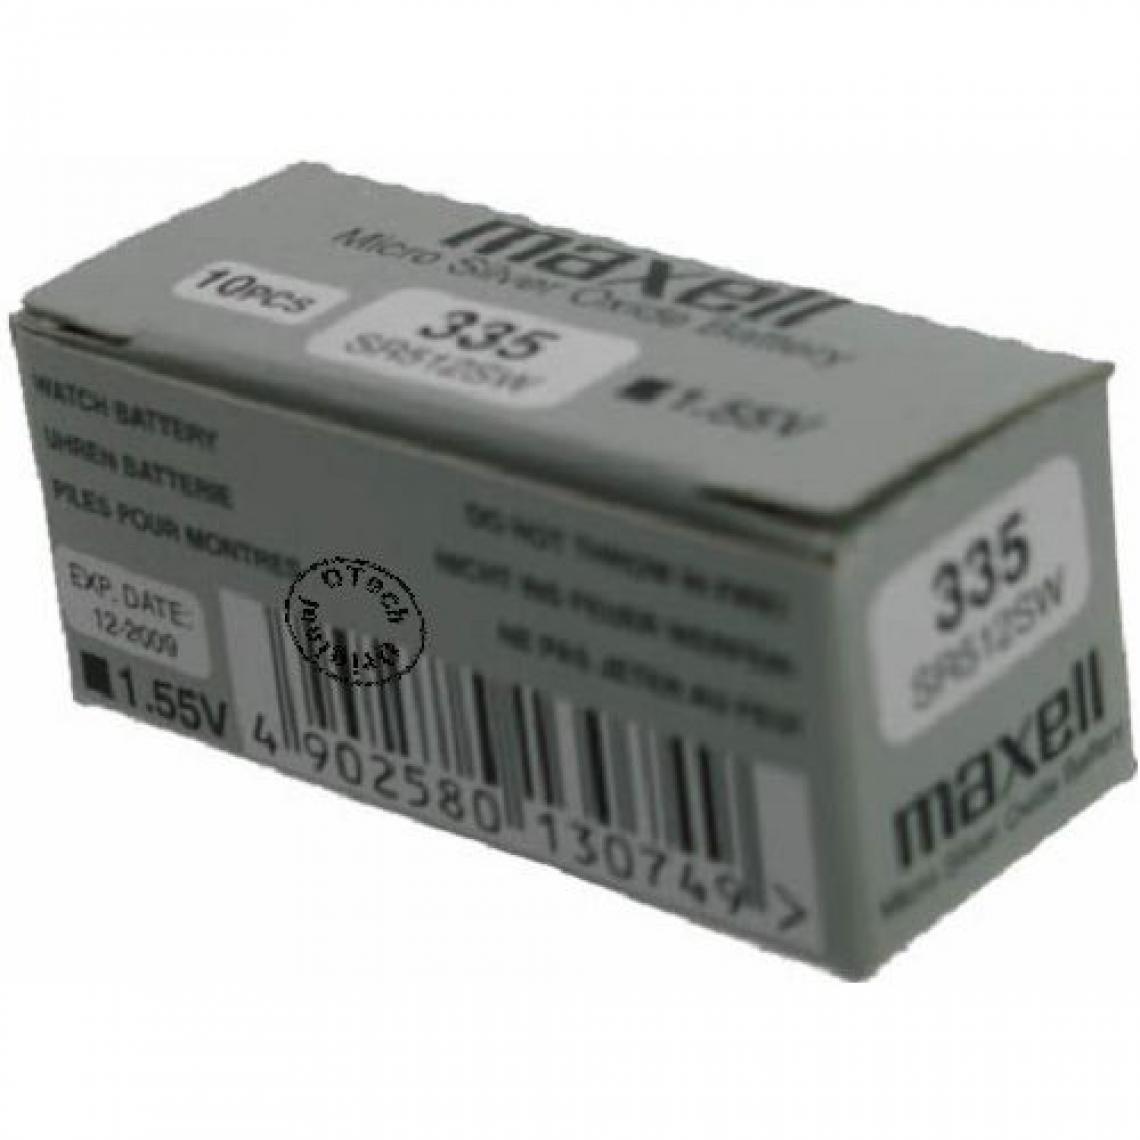 Otech - Pack de 10 piles maxell pour OTECH 4902580130749 - Piles rechargeables